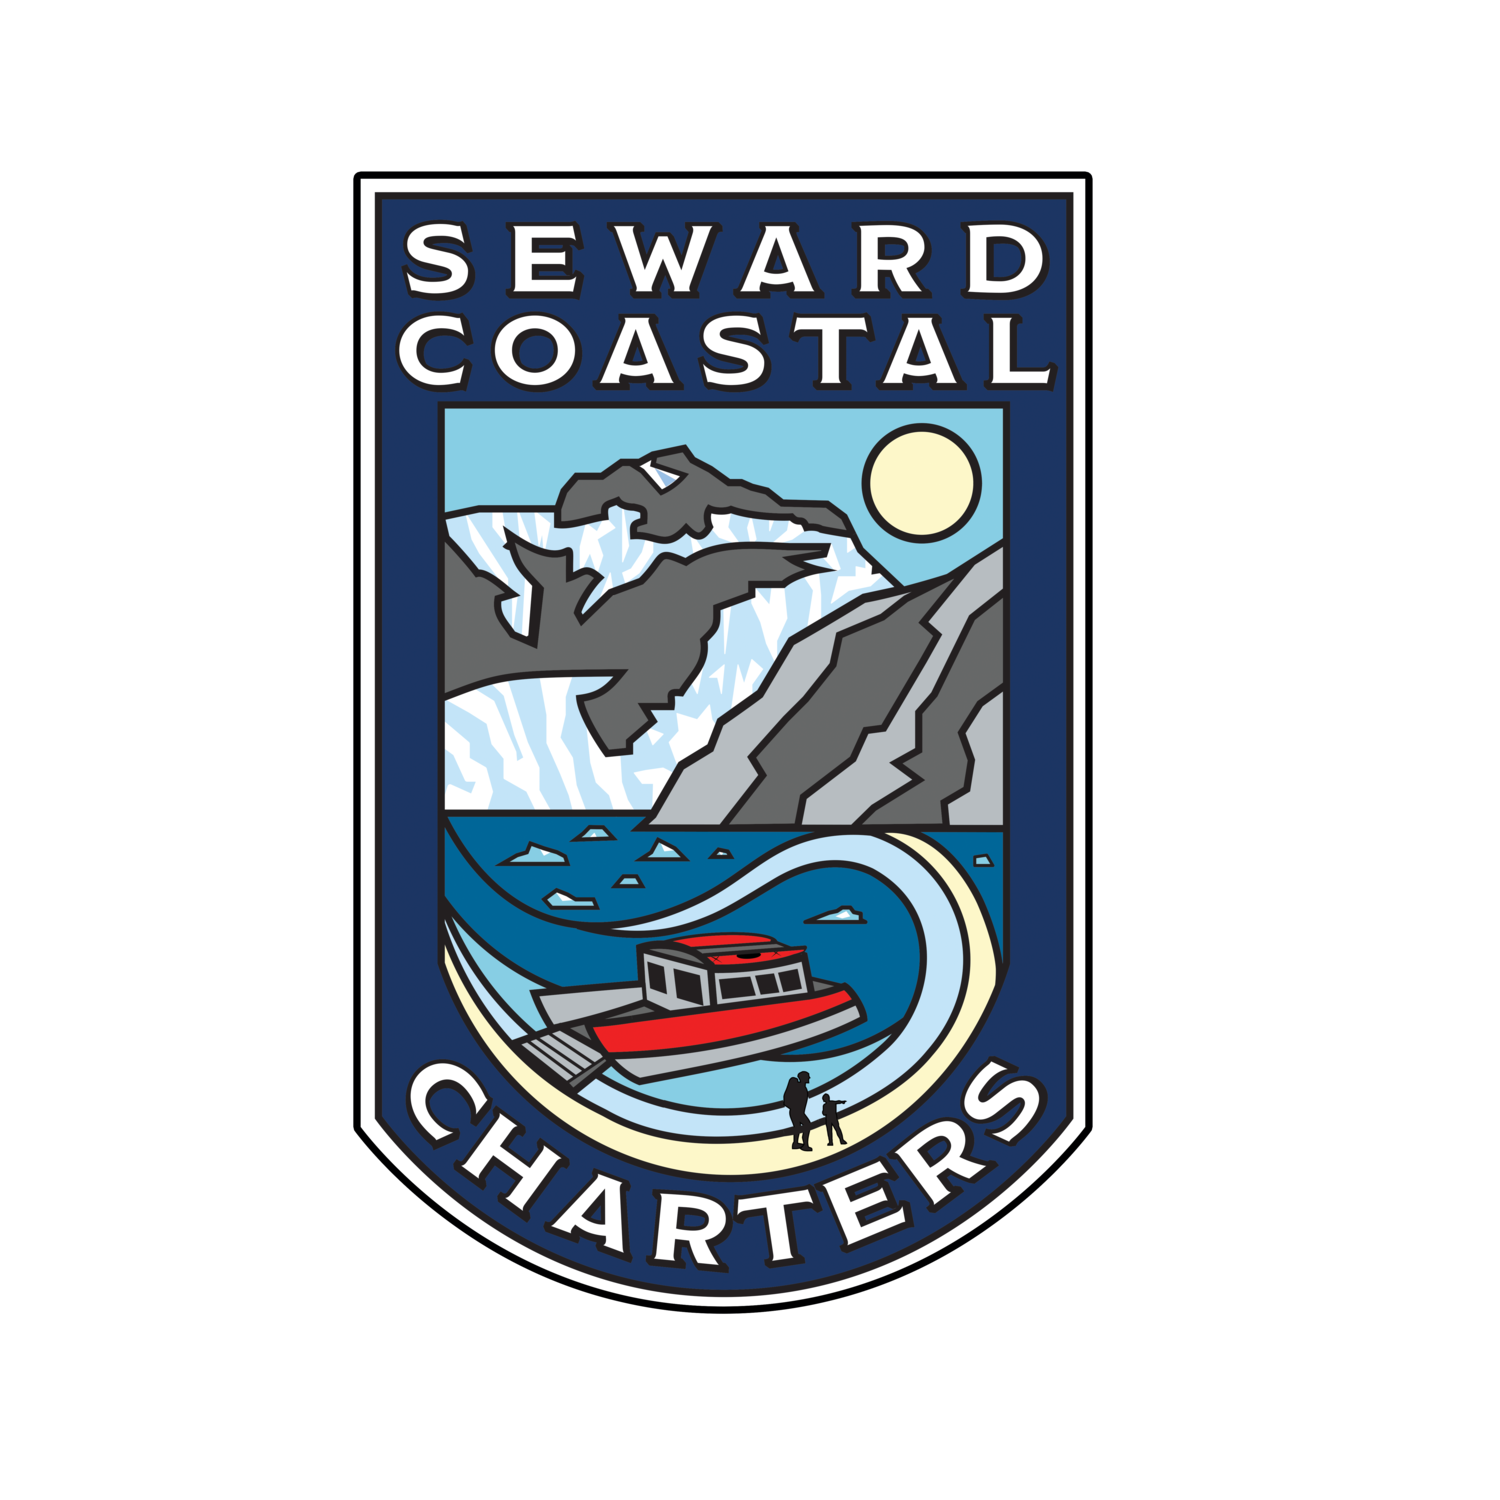 Seward Coastal Charters